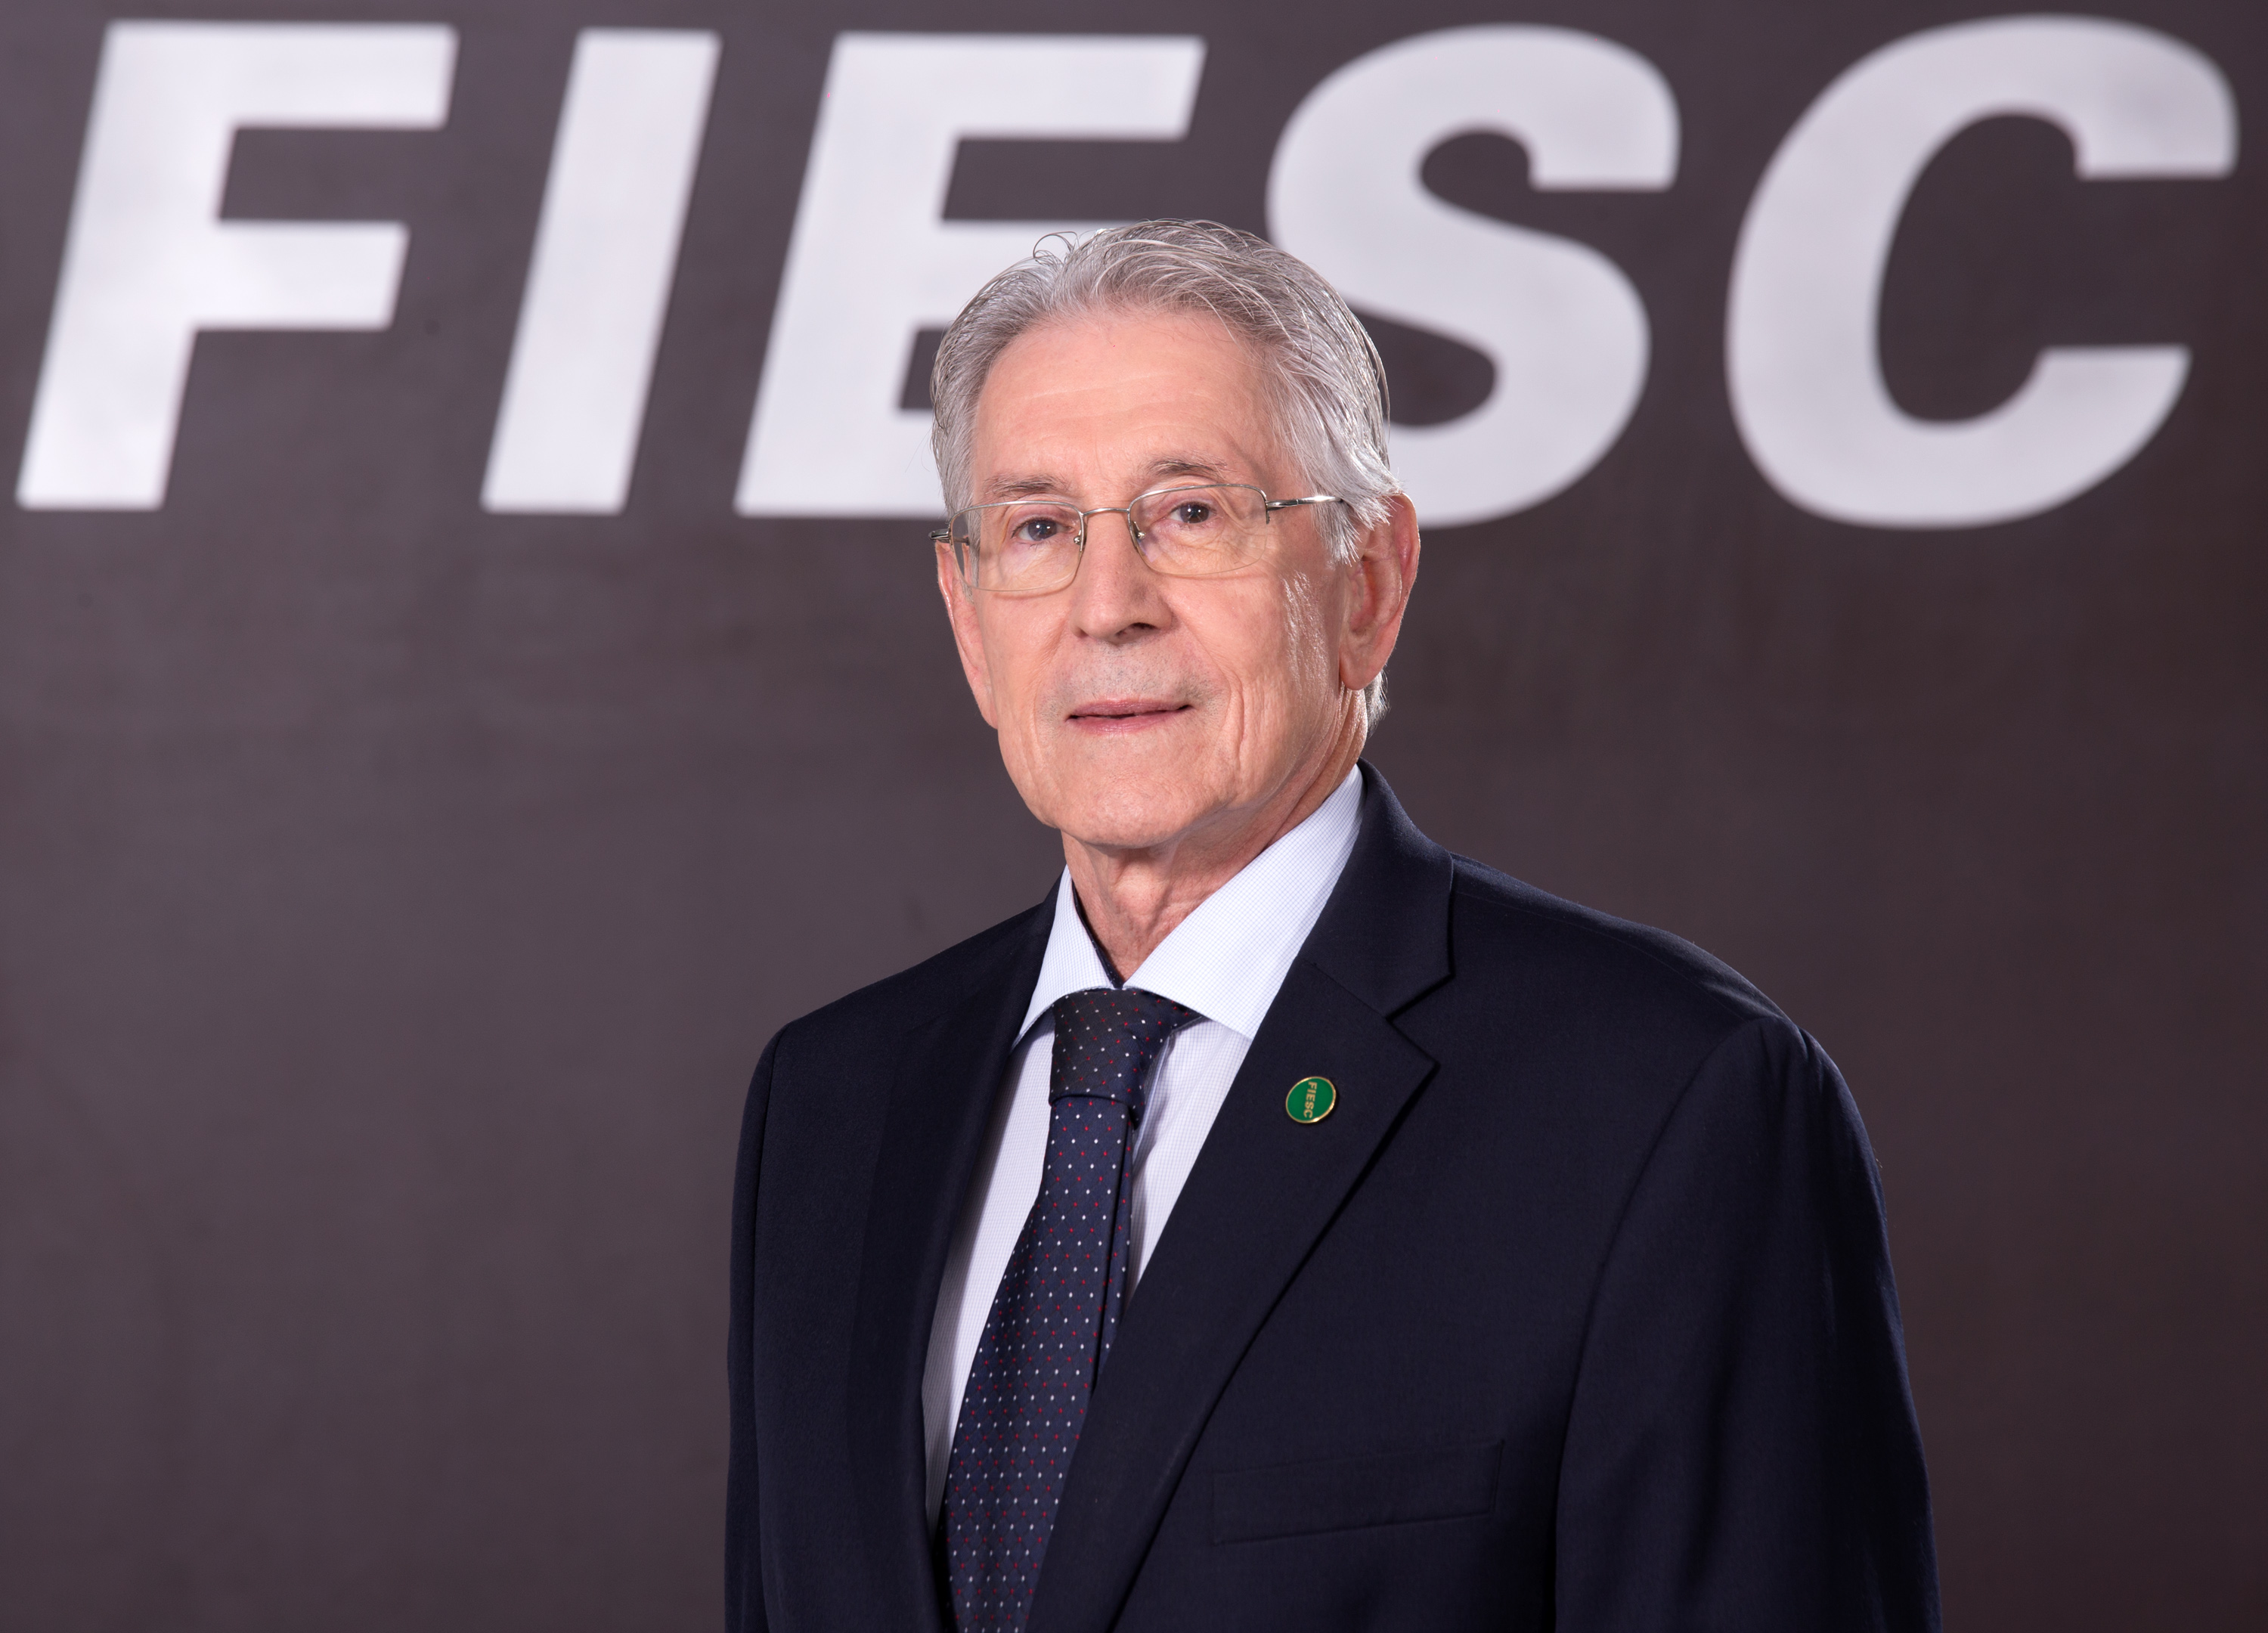 Presidente da FIESC, Glauco José Côrte (Foto: Marc